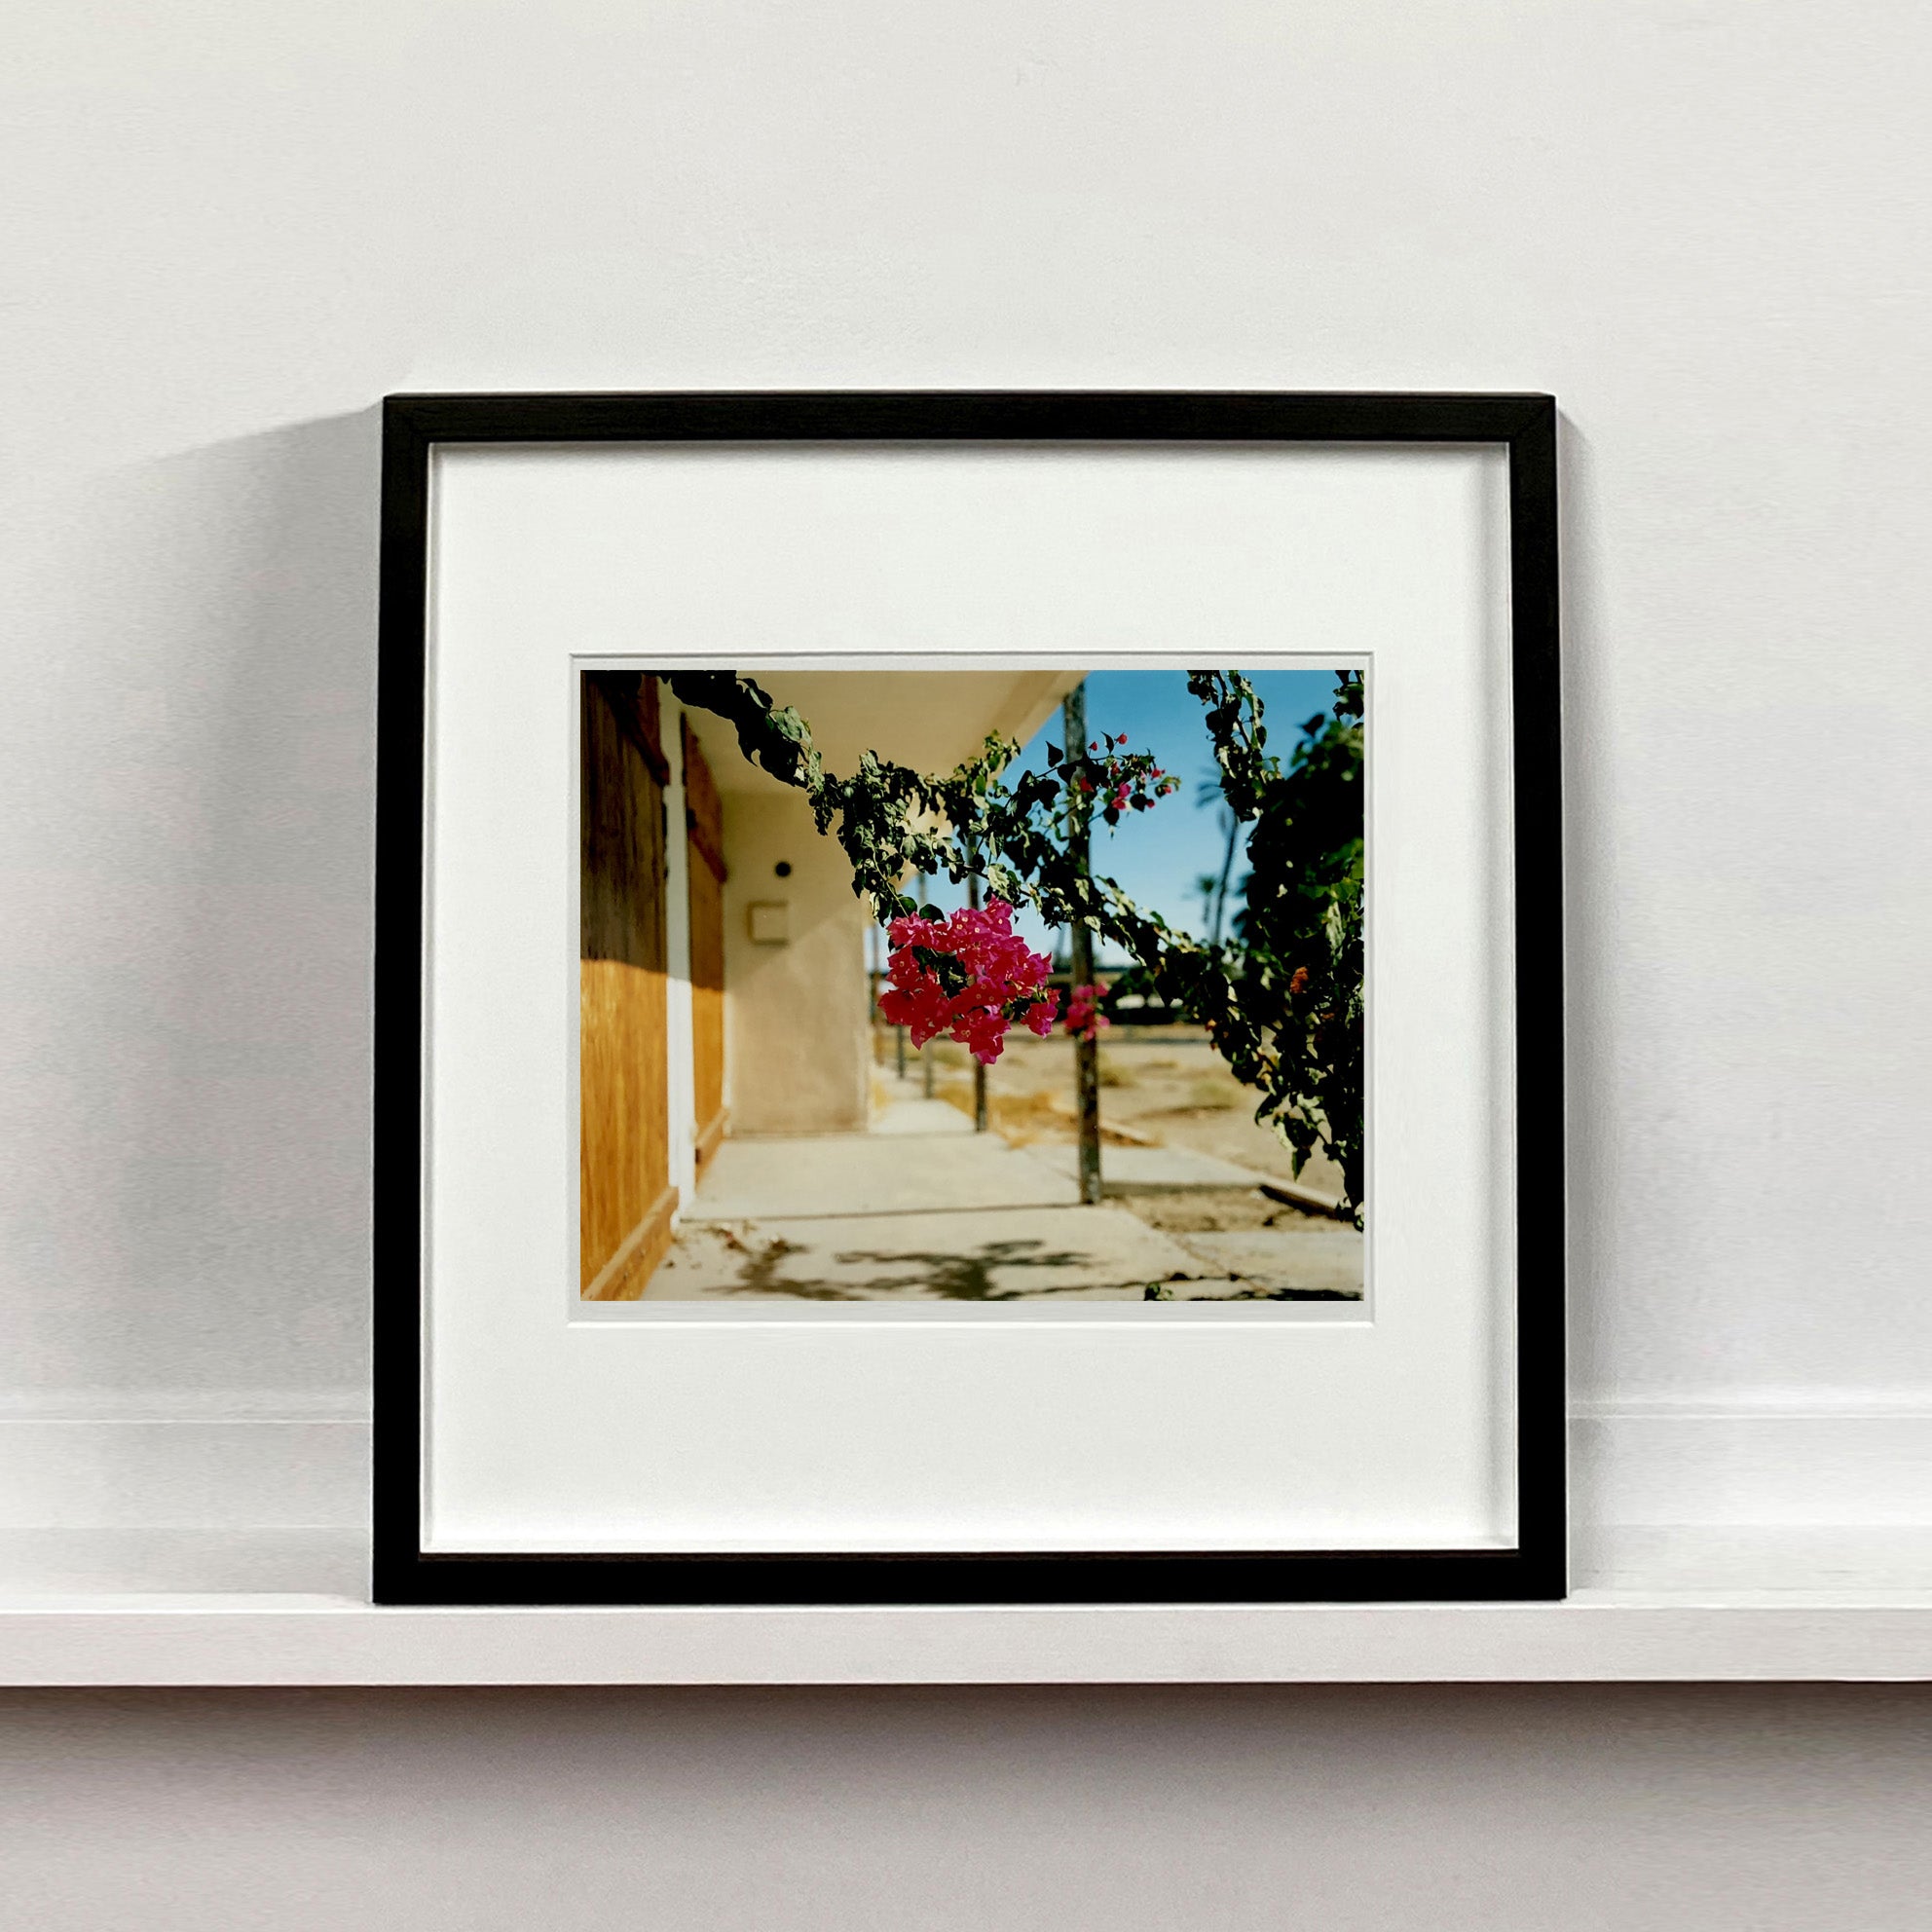 Black framed photograph held by photographer,Richard Heeps. A flowering bougainvillea hangs outside a motel entrance.